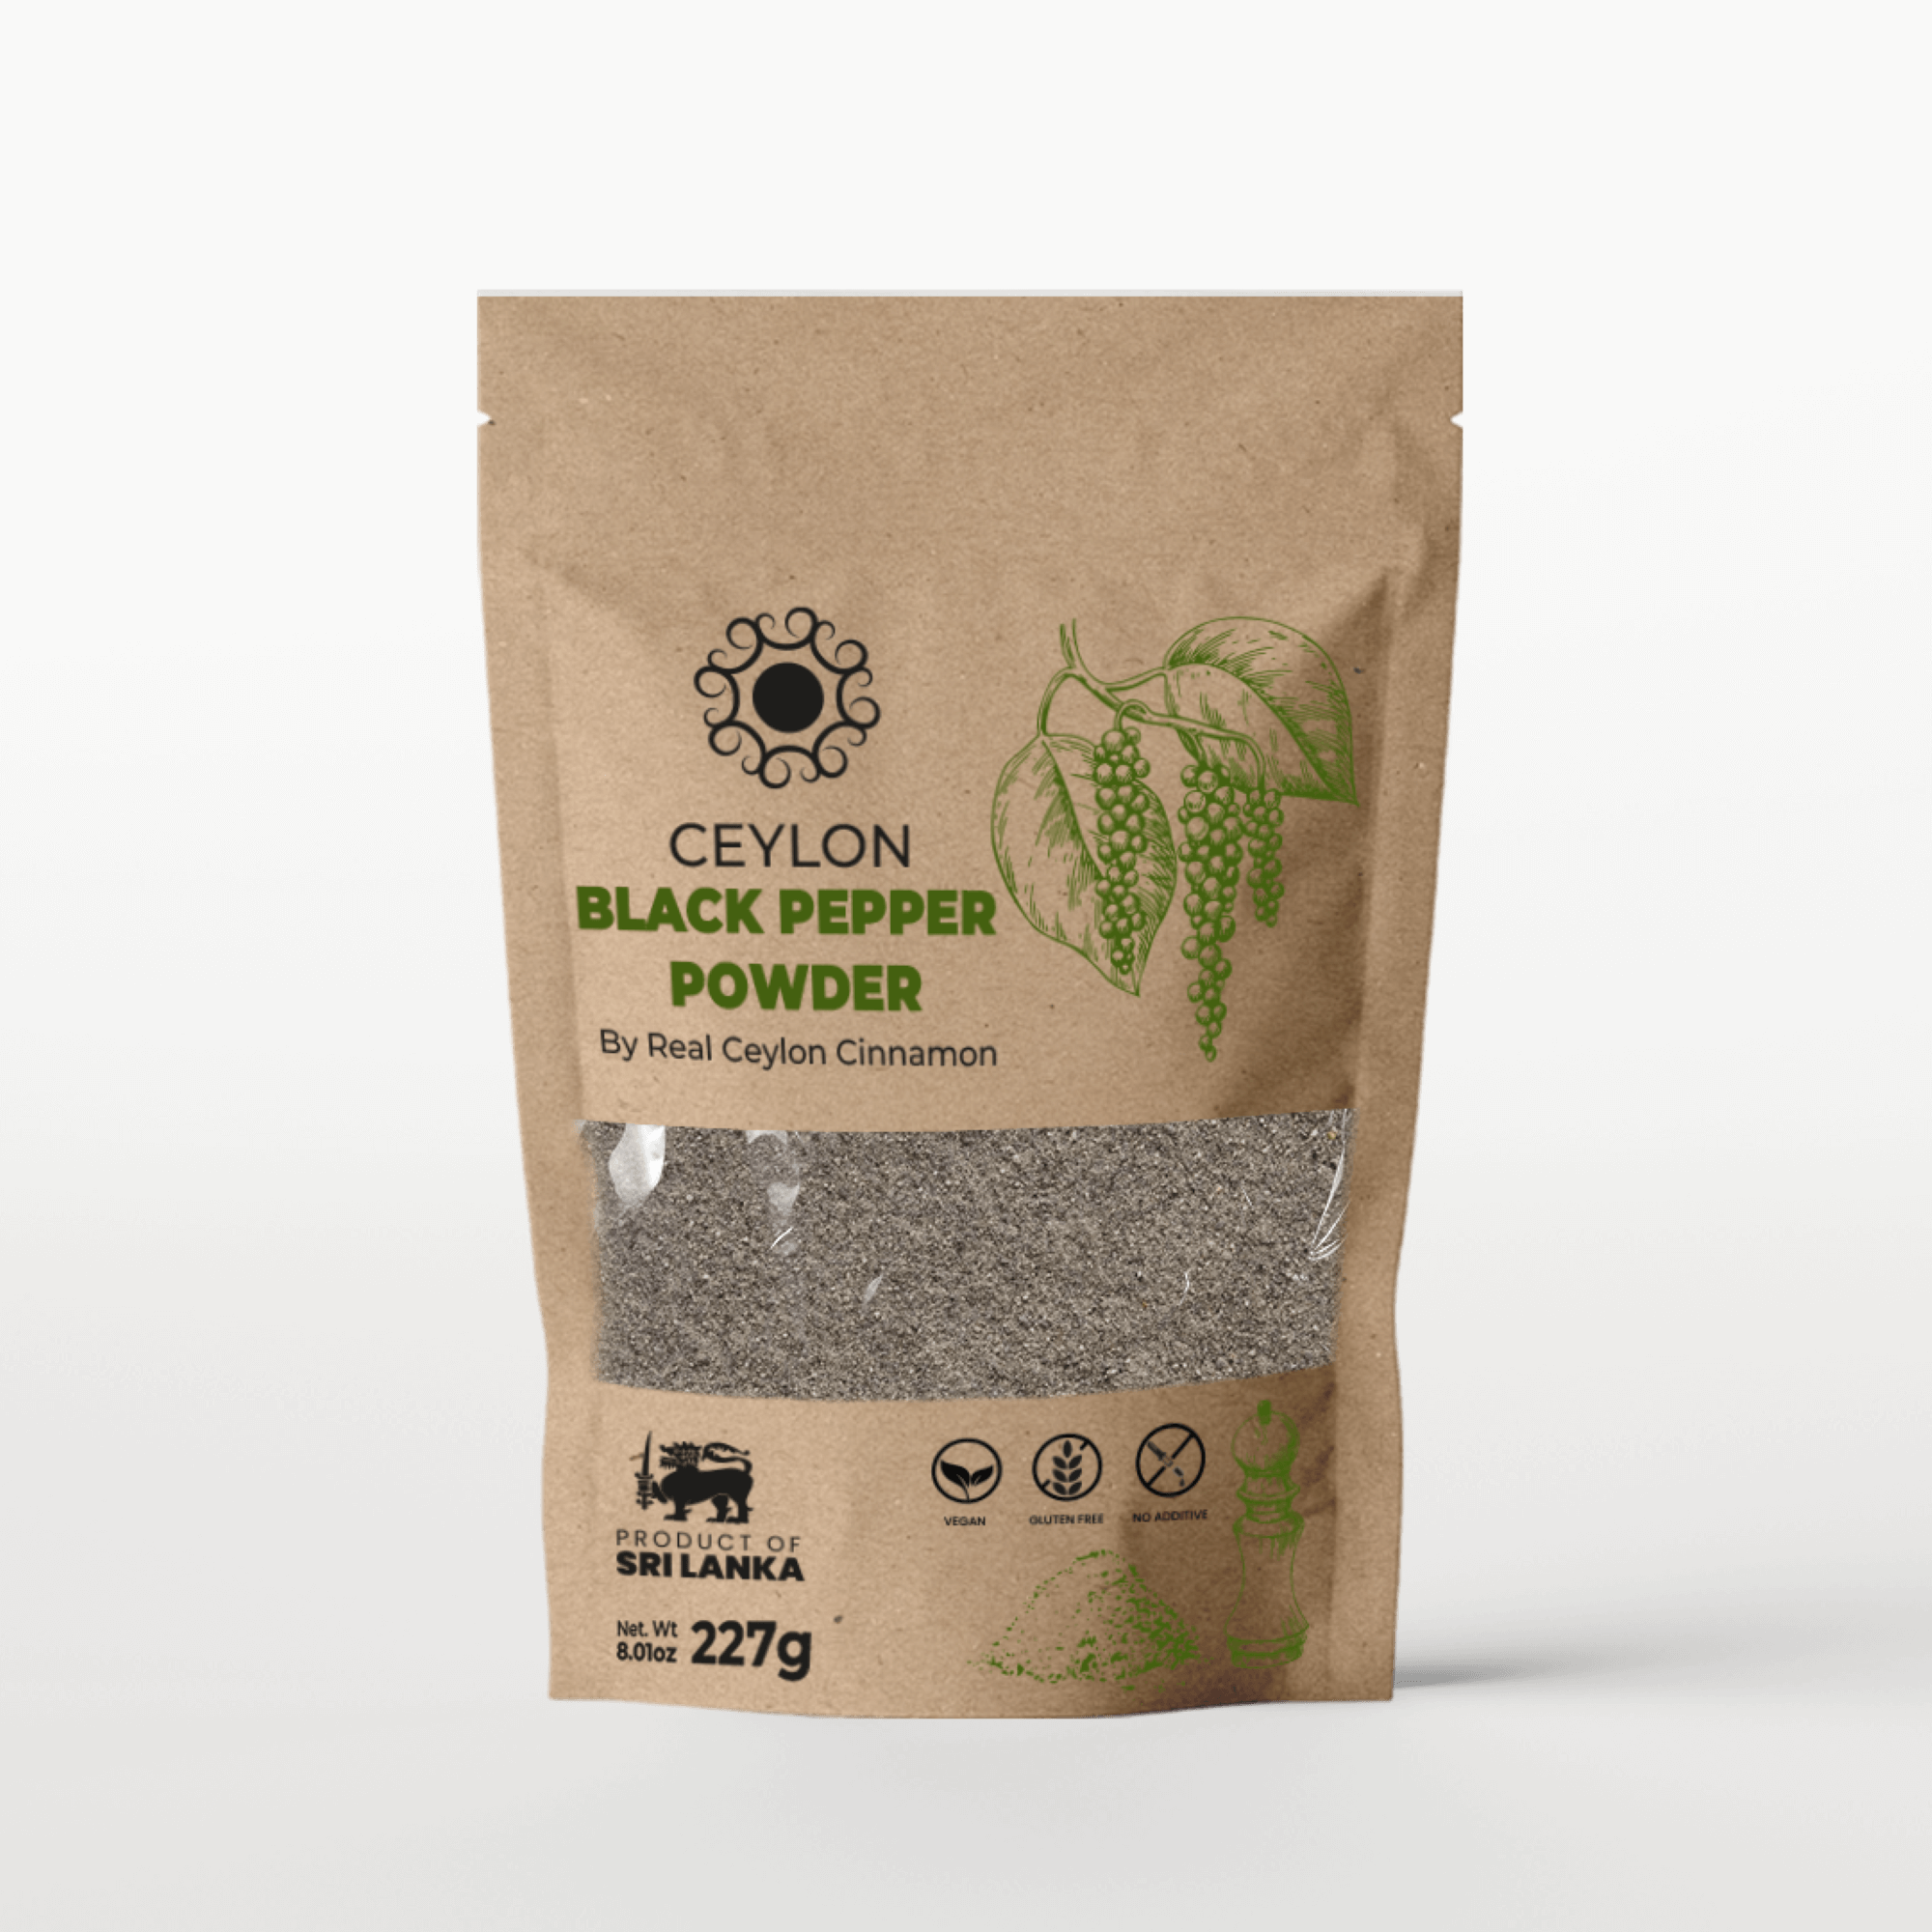 Black pepper powder 227g